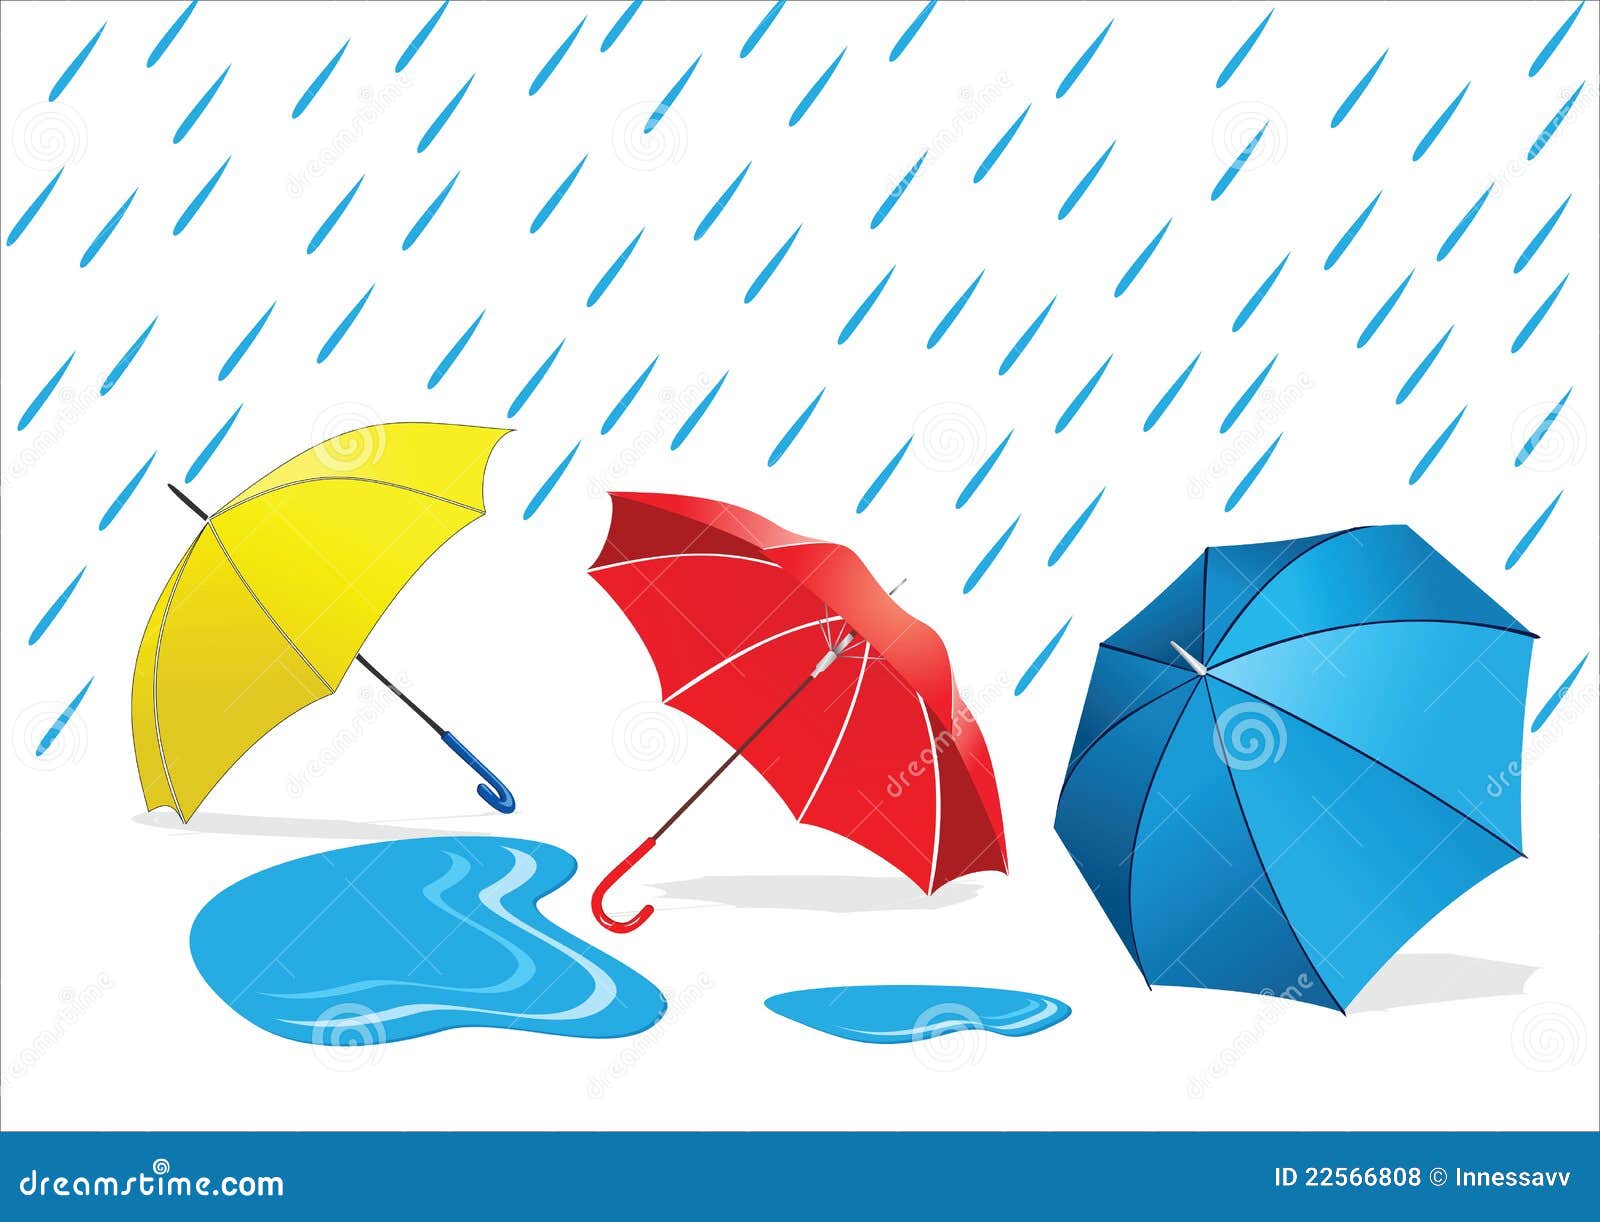 clipart of umbrellas and rain - photo #45